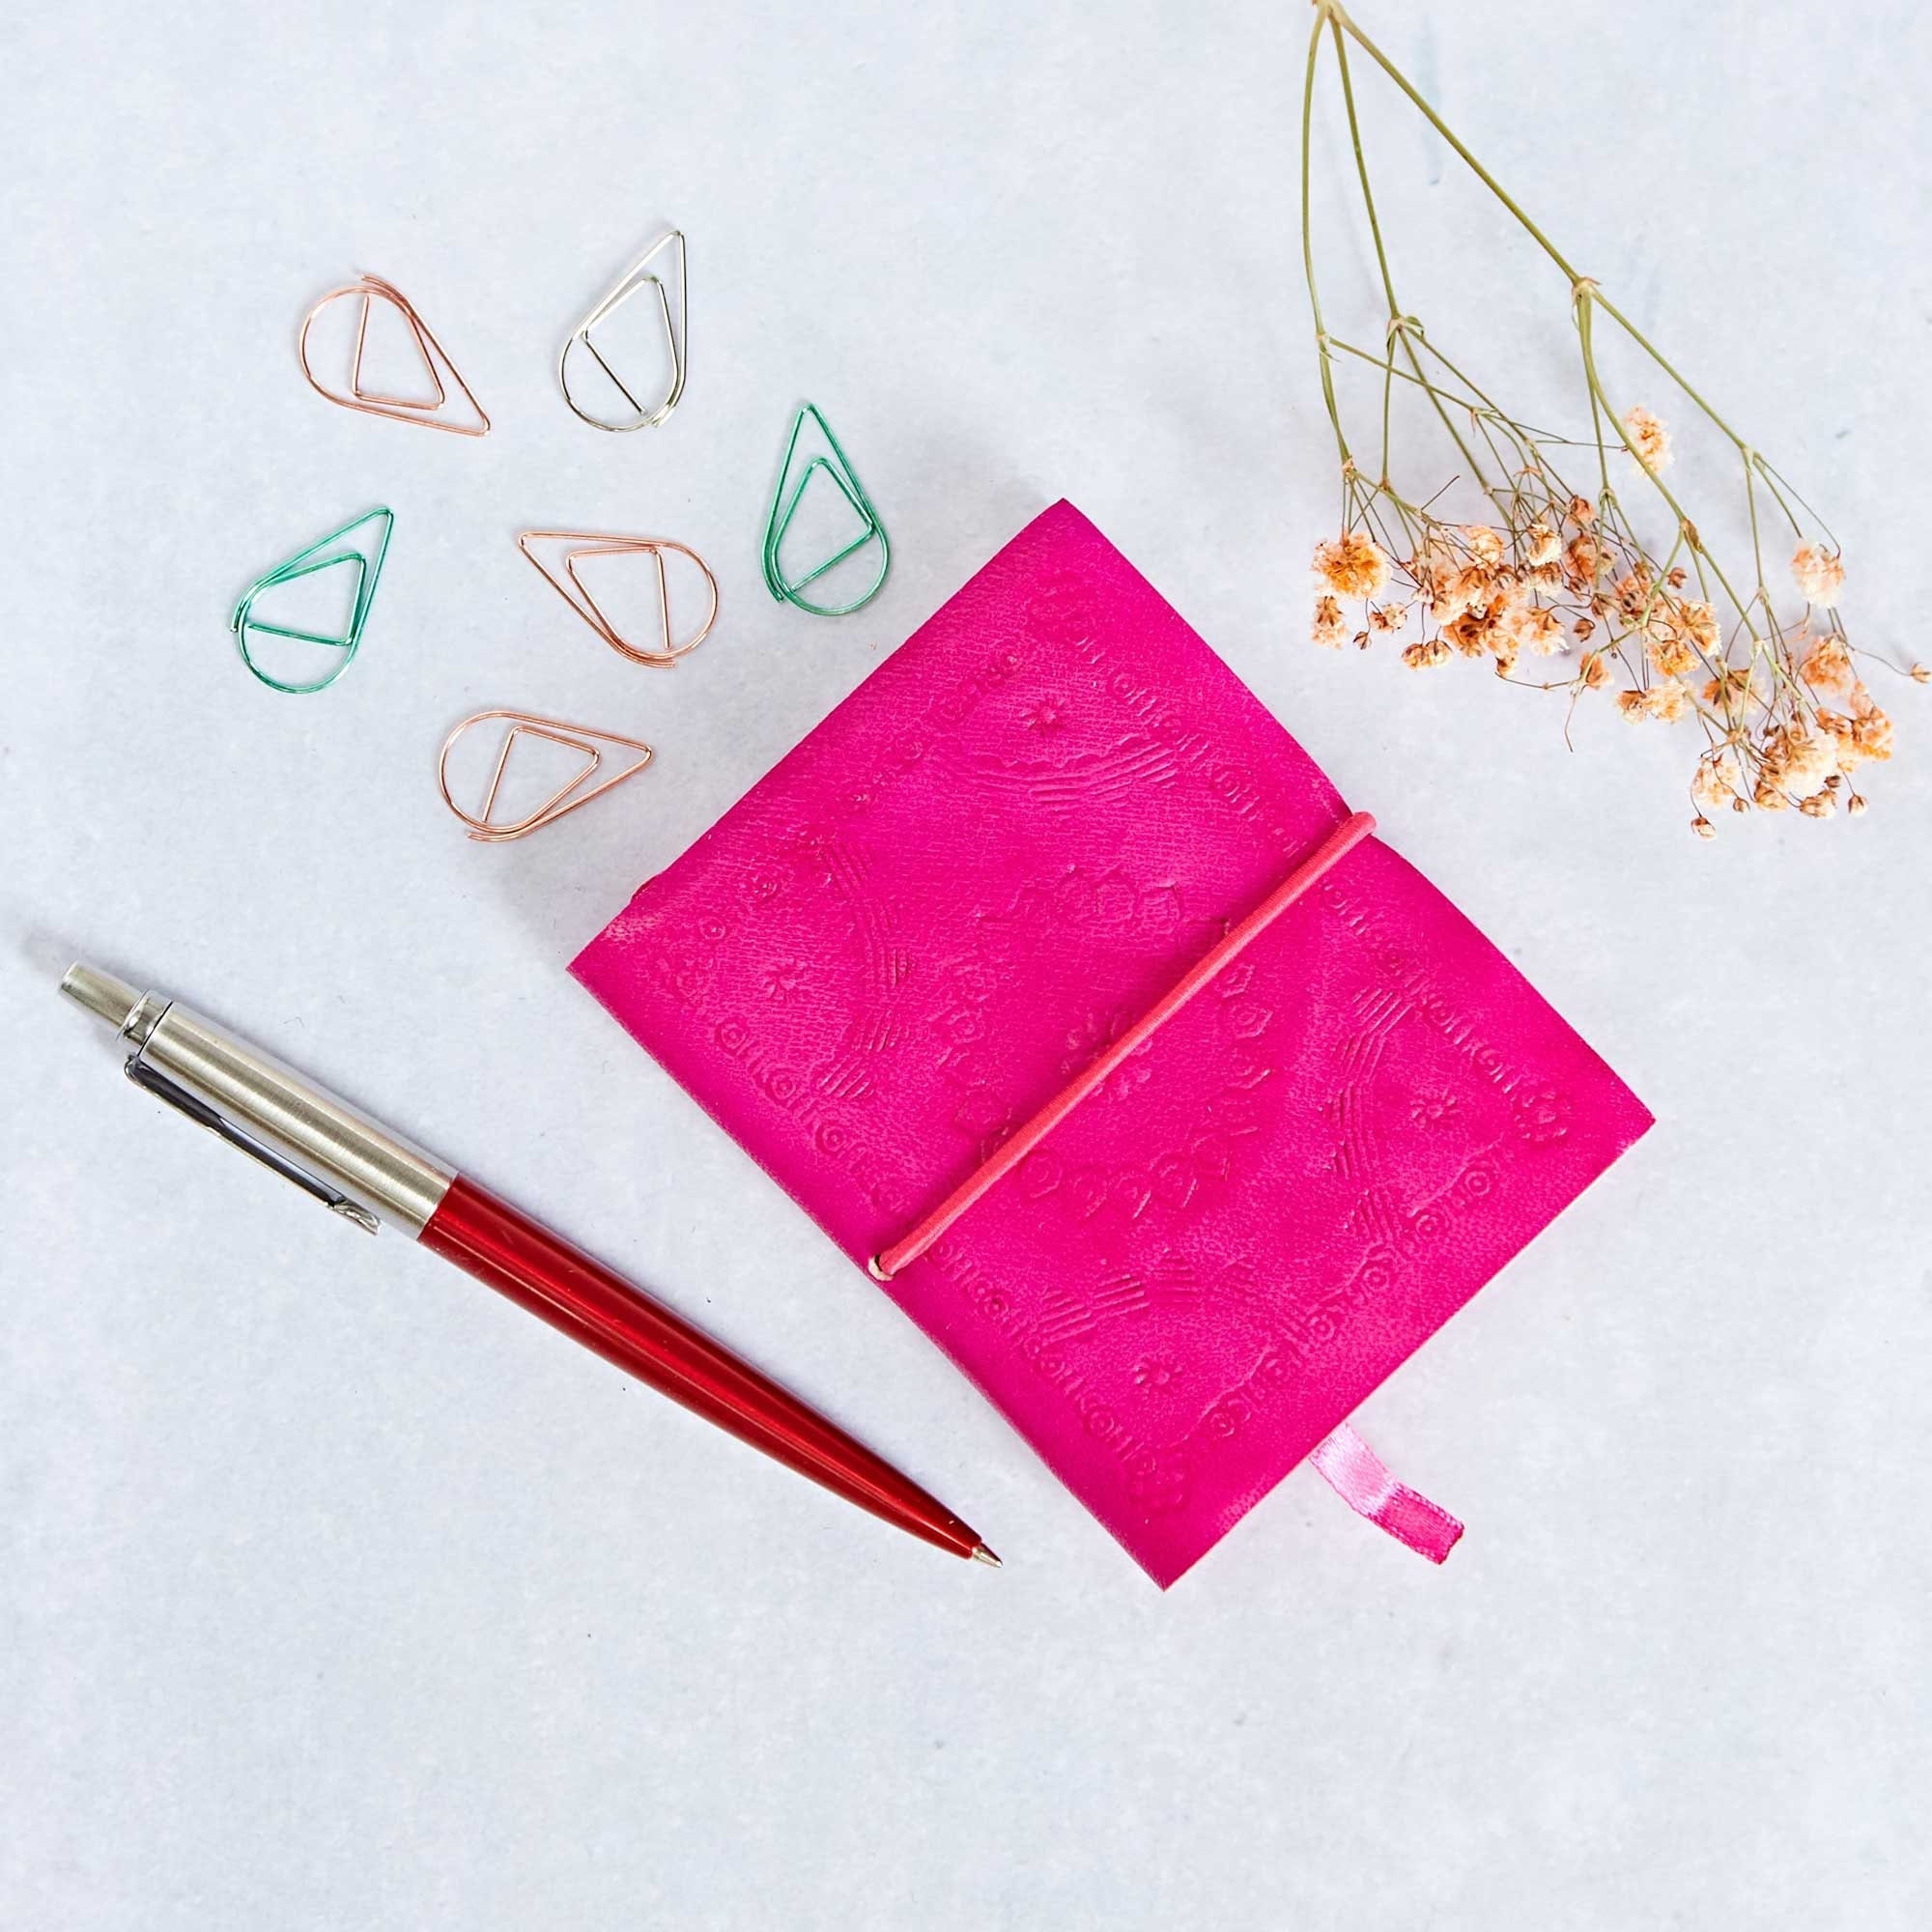 B6 Blank Notebook pink Snow / Pink Drawing Notebook / Pink Colored Paper  Notebook / Journal / Spiral Notebook / School Notebook, Supplies 